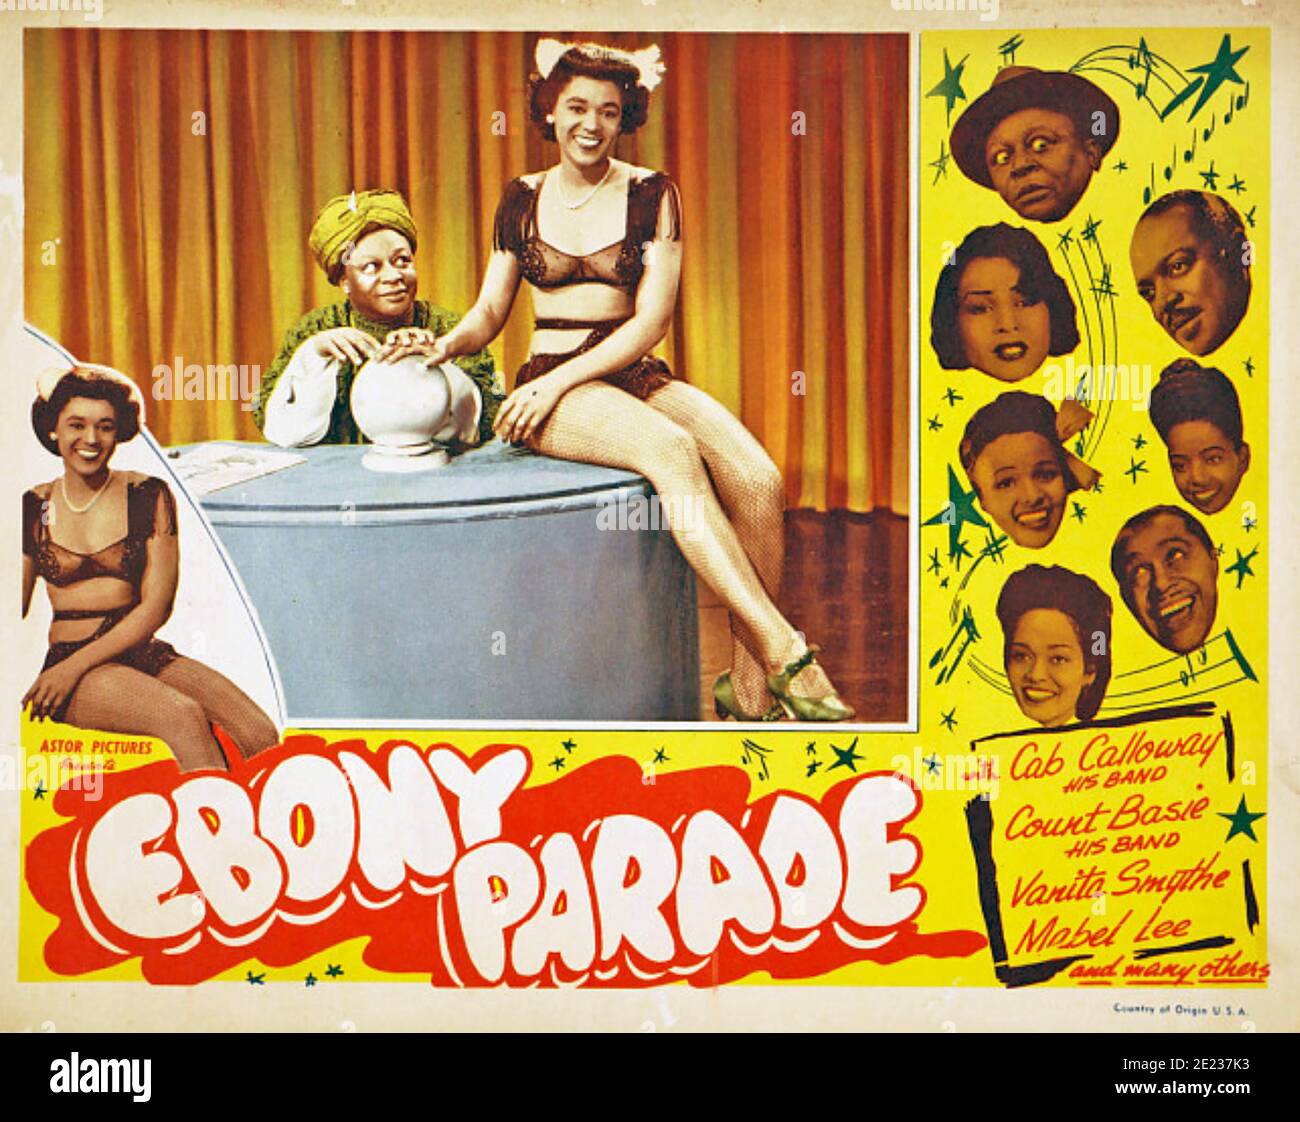 EBONY PARADE 1947 Astor Pictures film Foto Stock